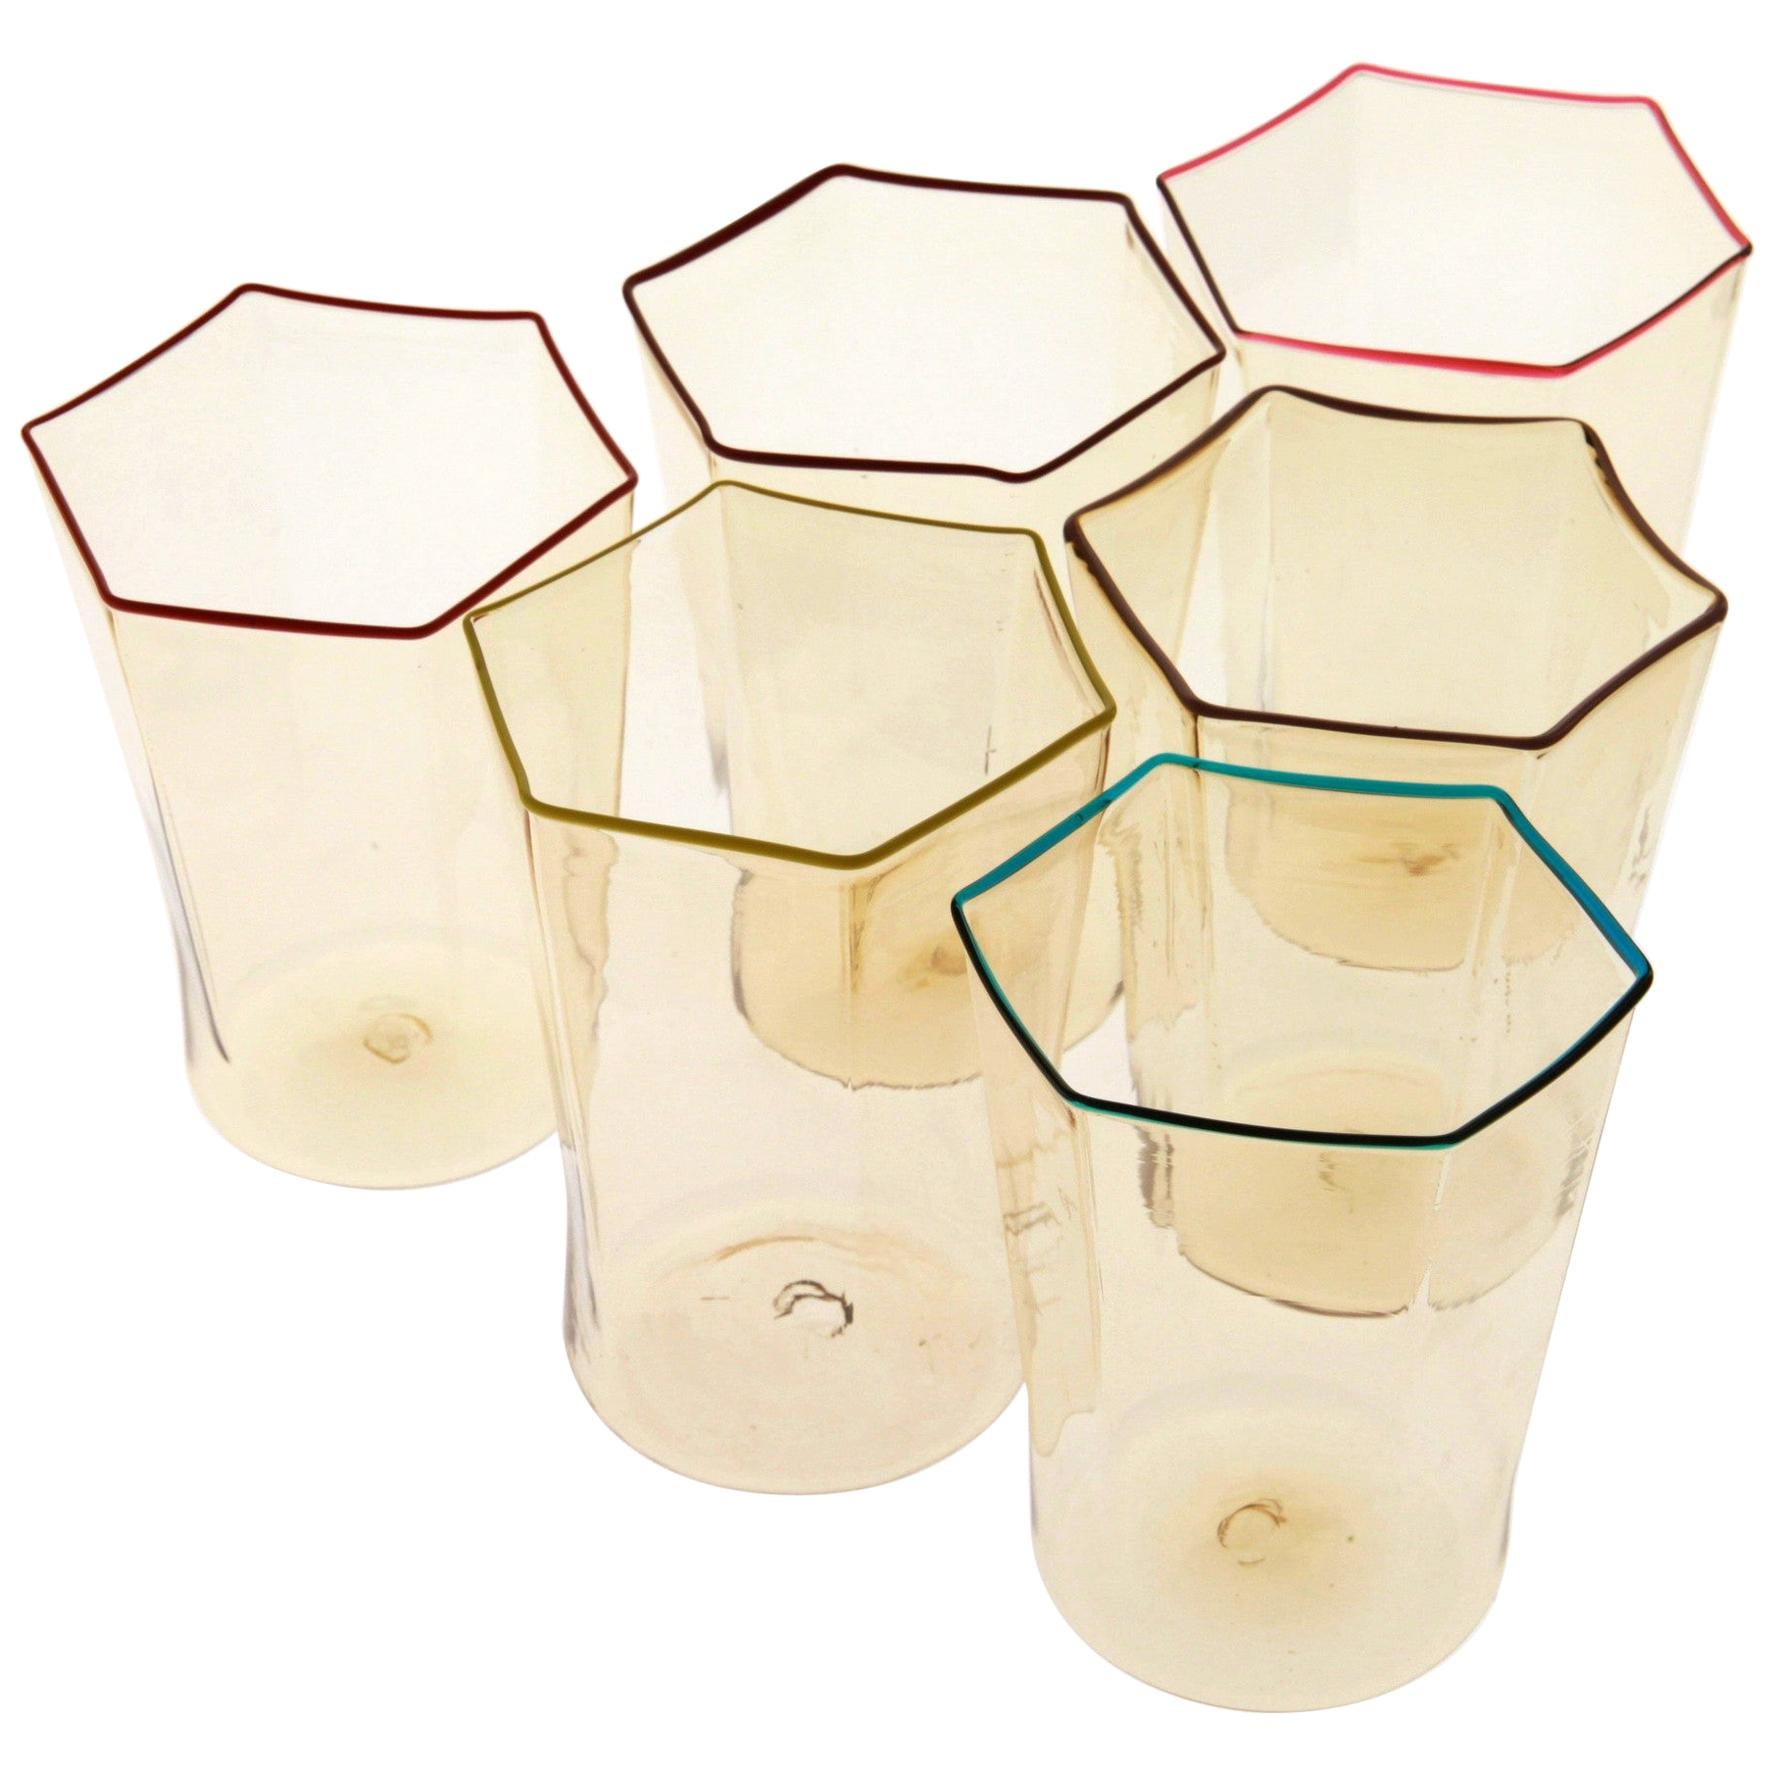 Six Hexagonal Pagliesco Glasses, Assorted Color Rim, Carlo Scarpa, 1932 Design